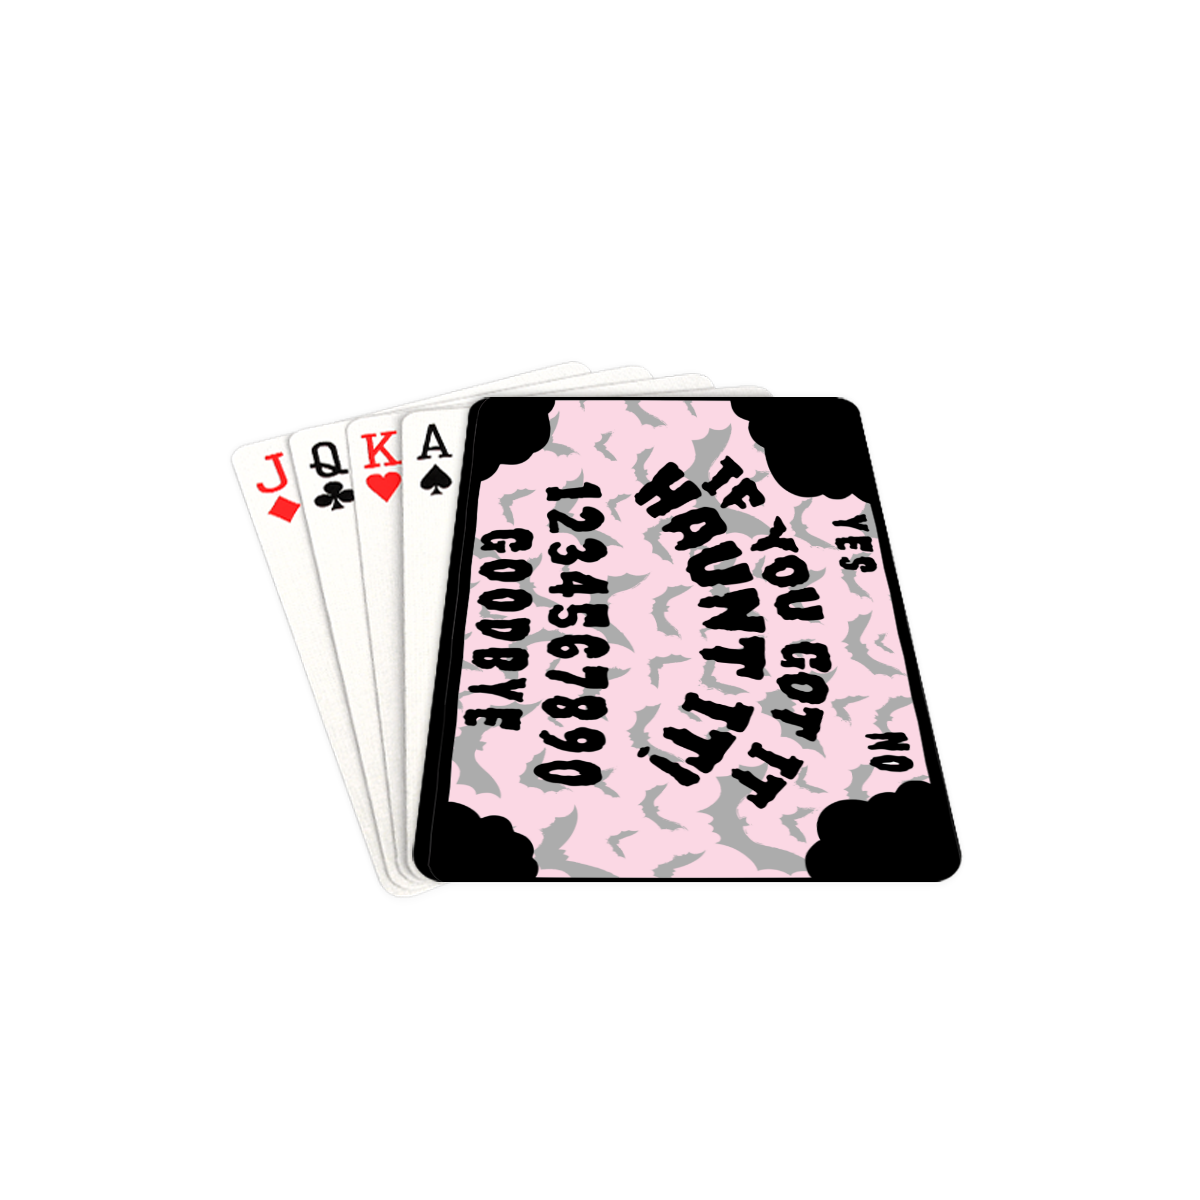 Ouija_Cards Playing Cards 2.5"x3.5"